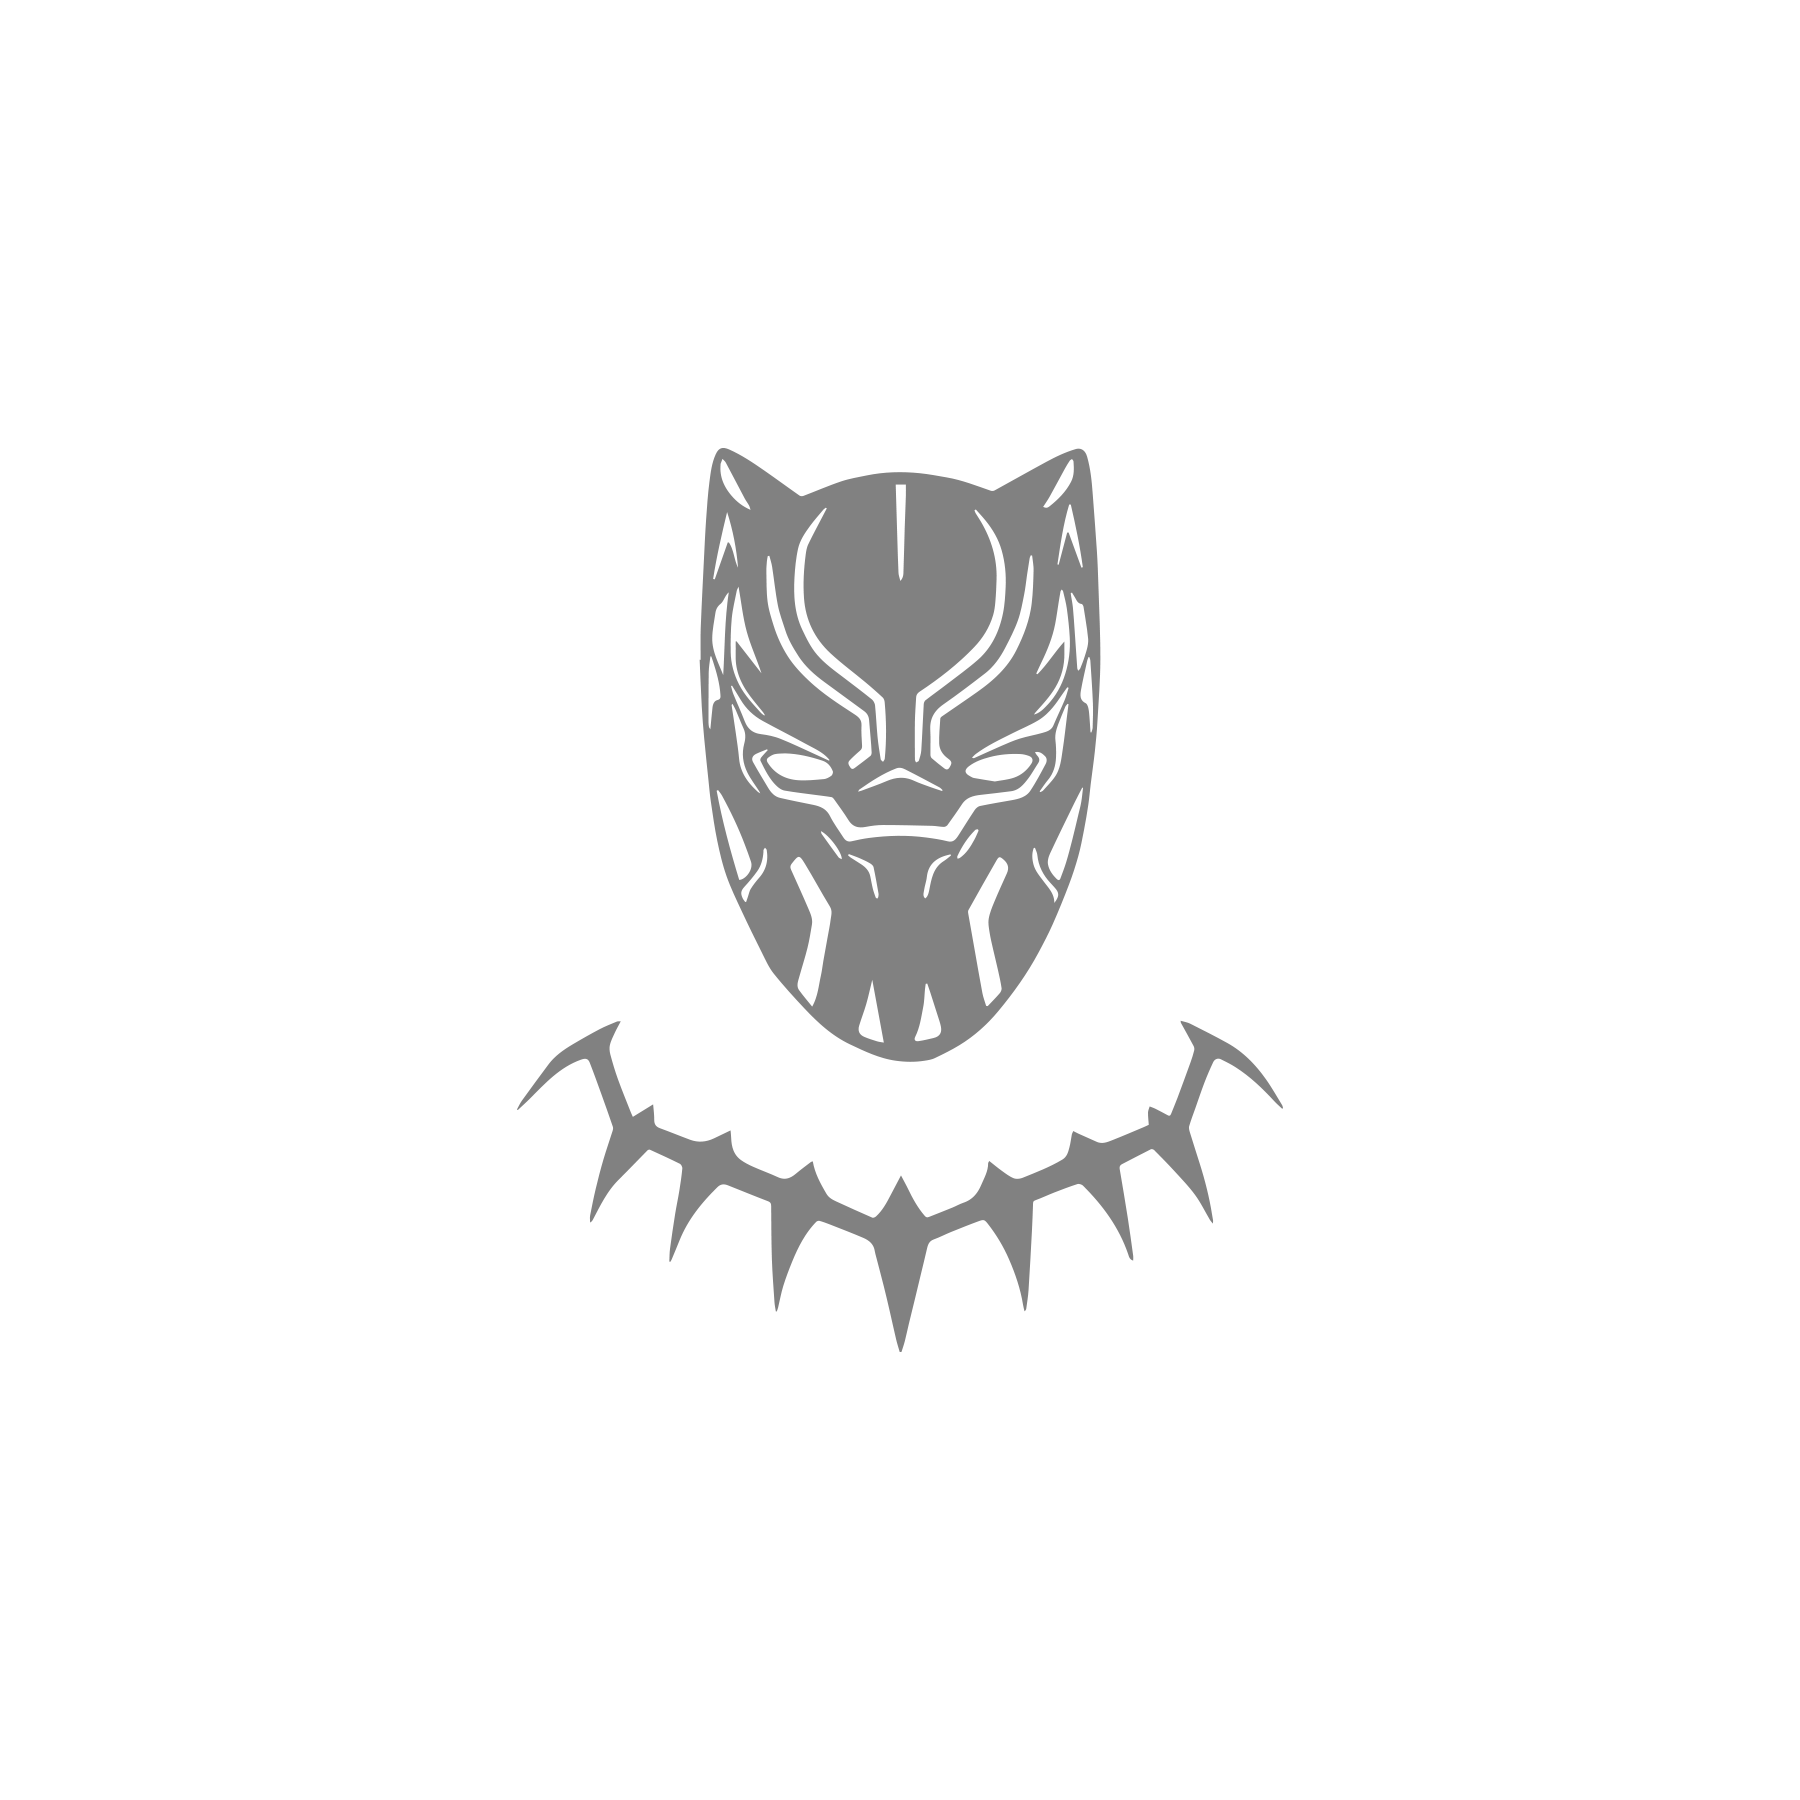 Marvel Black Panther Logo Png Picture Transparent - Black Panther Comic Logo  Transparent PNG - 600x257 - Free Download on NicePNG